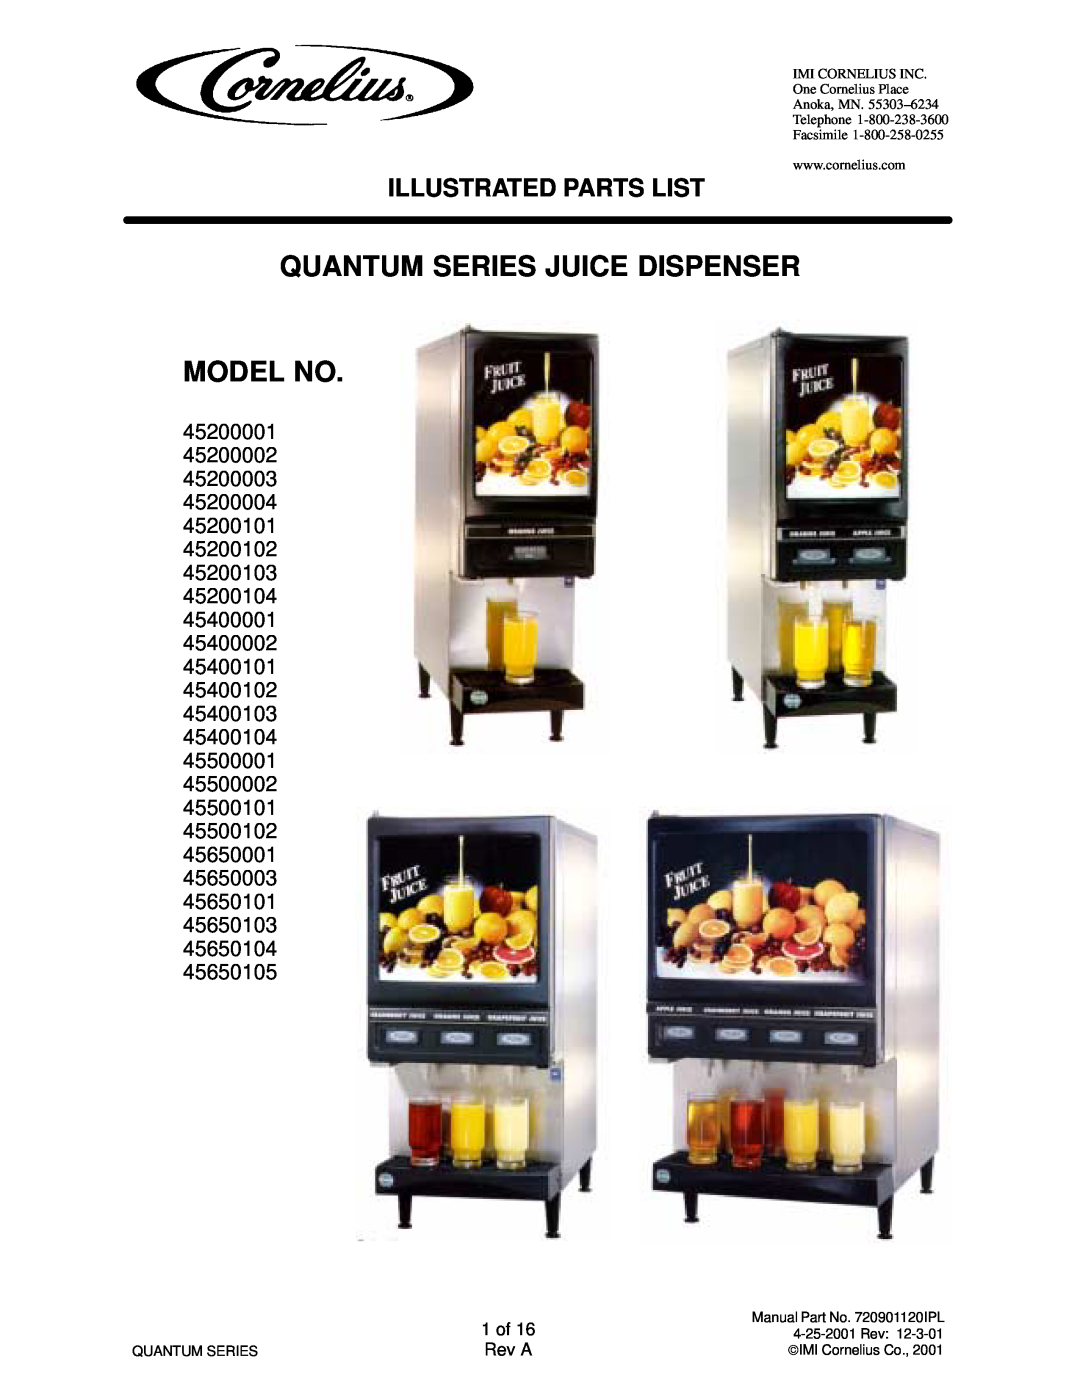 Panasonic 45200003, 45200103, 45400002, 45200004 manual Quantum Series Juice Dispenser Model No, Illustrated Parts List 